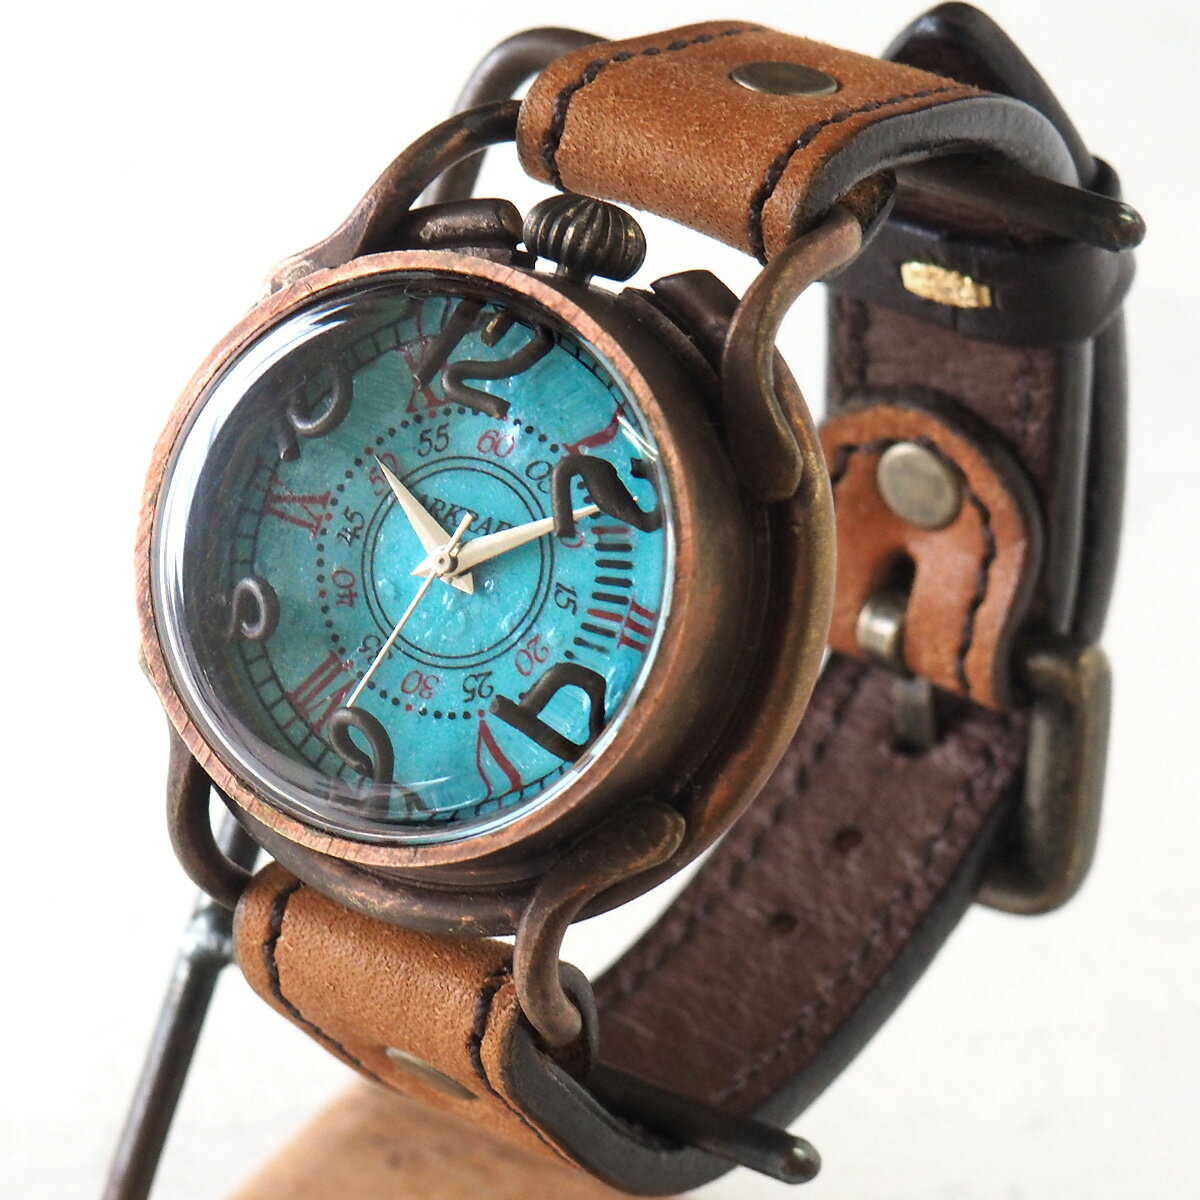 ARKRAFT(アークラフト) 手作り腕時計“PATRICE OCEAN−パトリス オーシャン−” プレミアムストラップ  新木秀和 ハンドメイド ウォッチ ハンドメイド腕時計 手作り時計 海 メンズ・レディース 本革ベルト アンティーク調 真鍮 ターコイズブルー アナログ 日本製